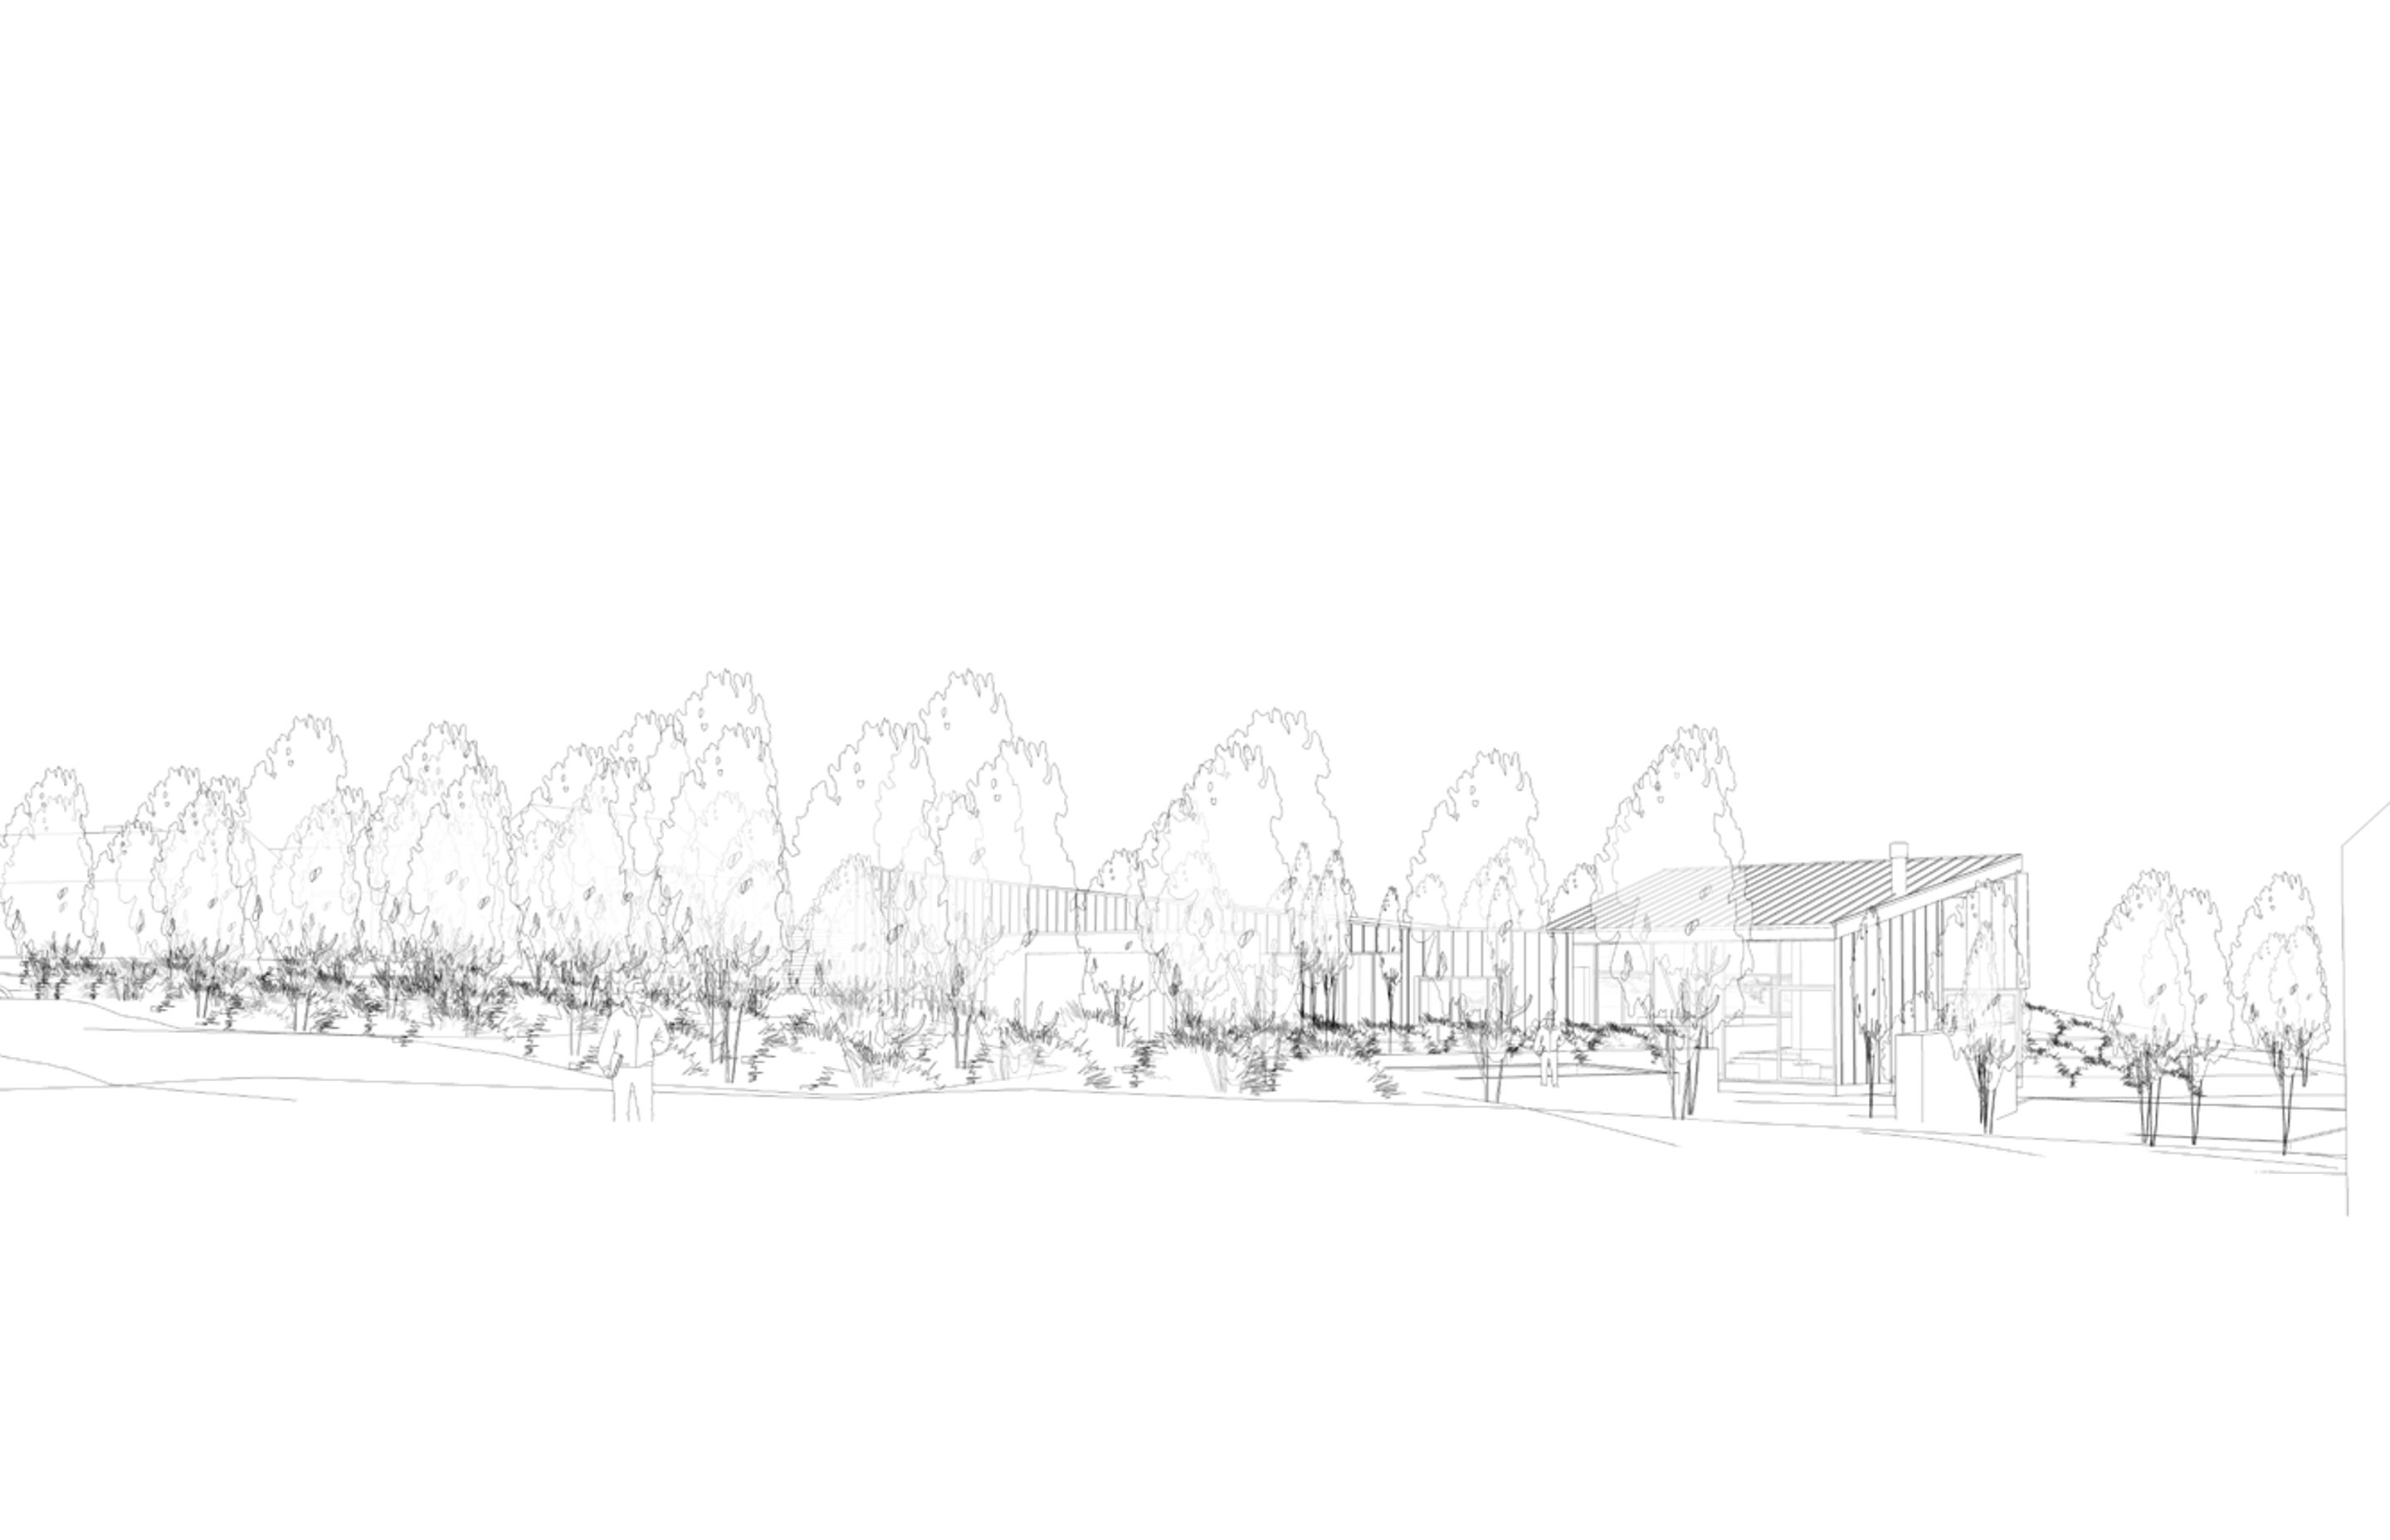 Original concept sketch by Hyndman Taylor Architects.